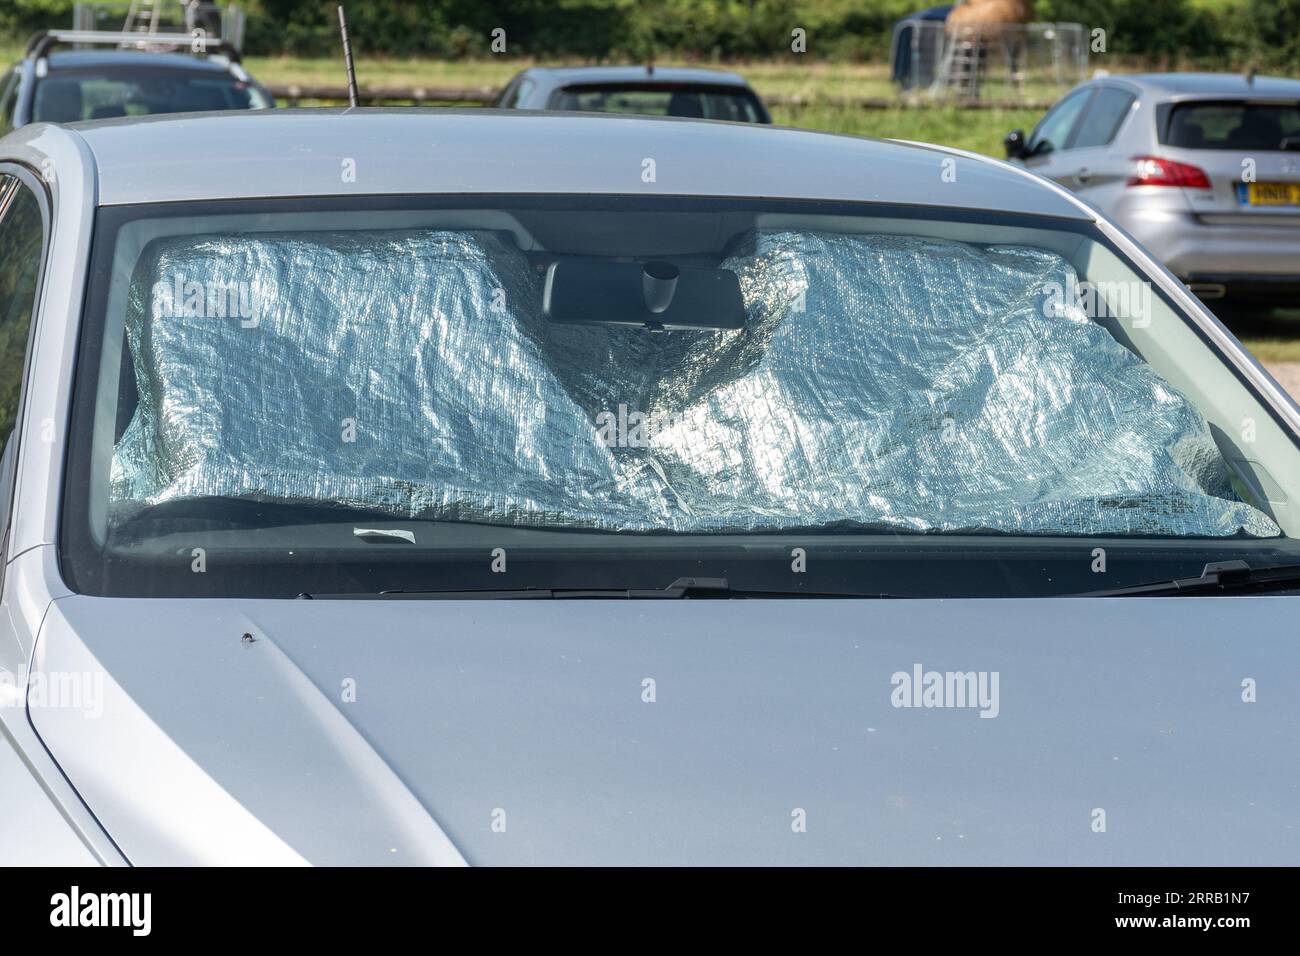 Car sun shade screen or sunshade covering the windscreen on a hot sunny day, UK Stock Photo